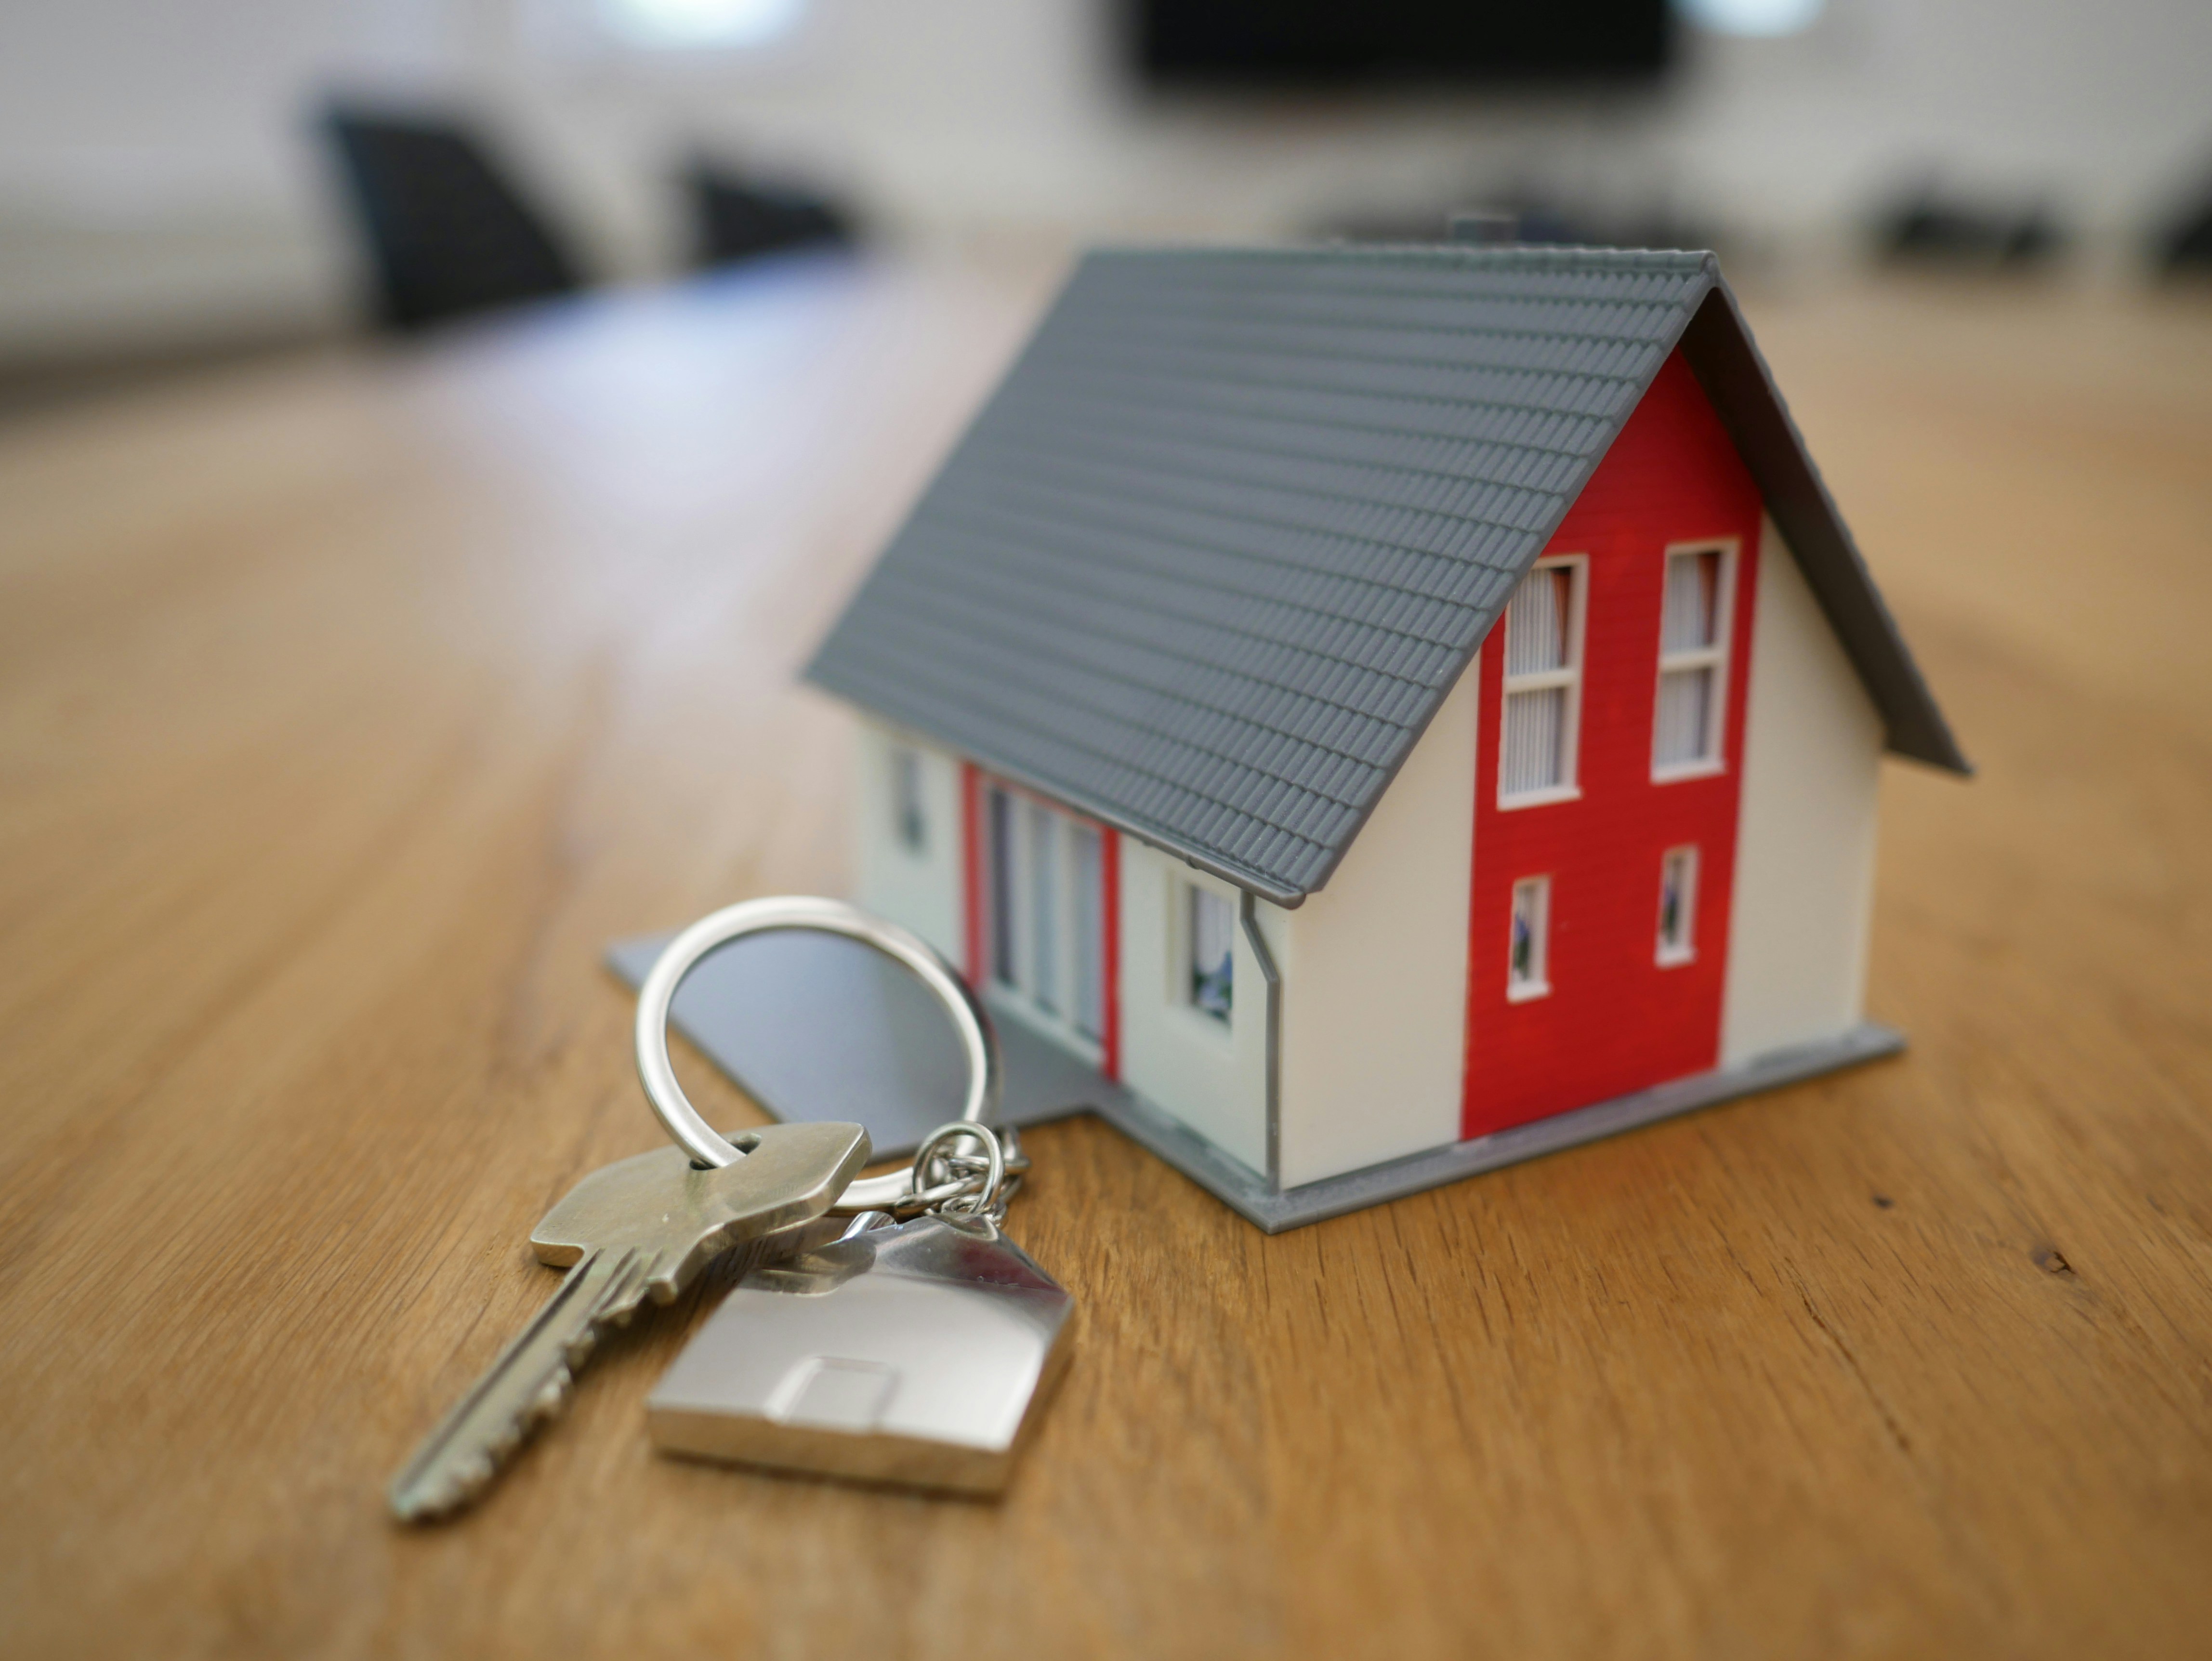 Miniature house model with keys.